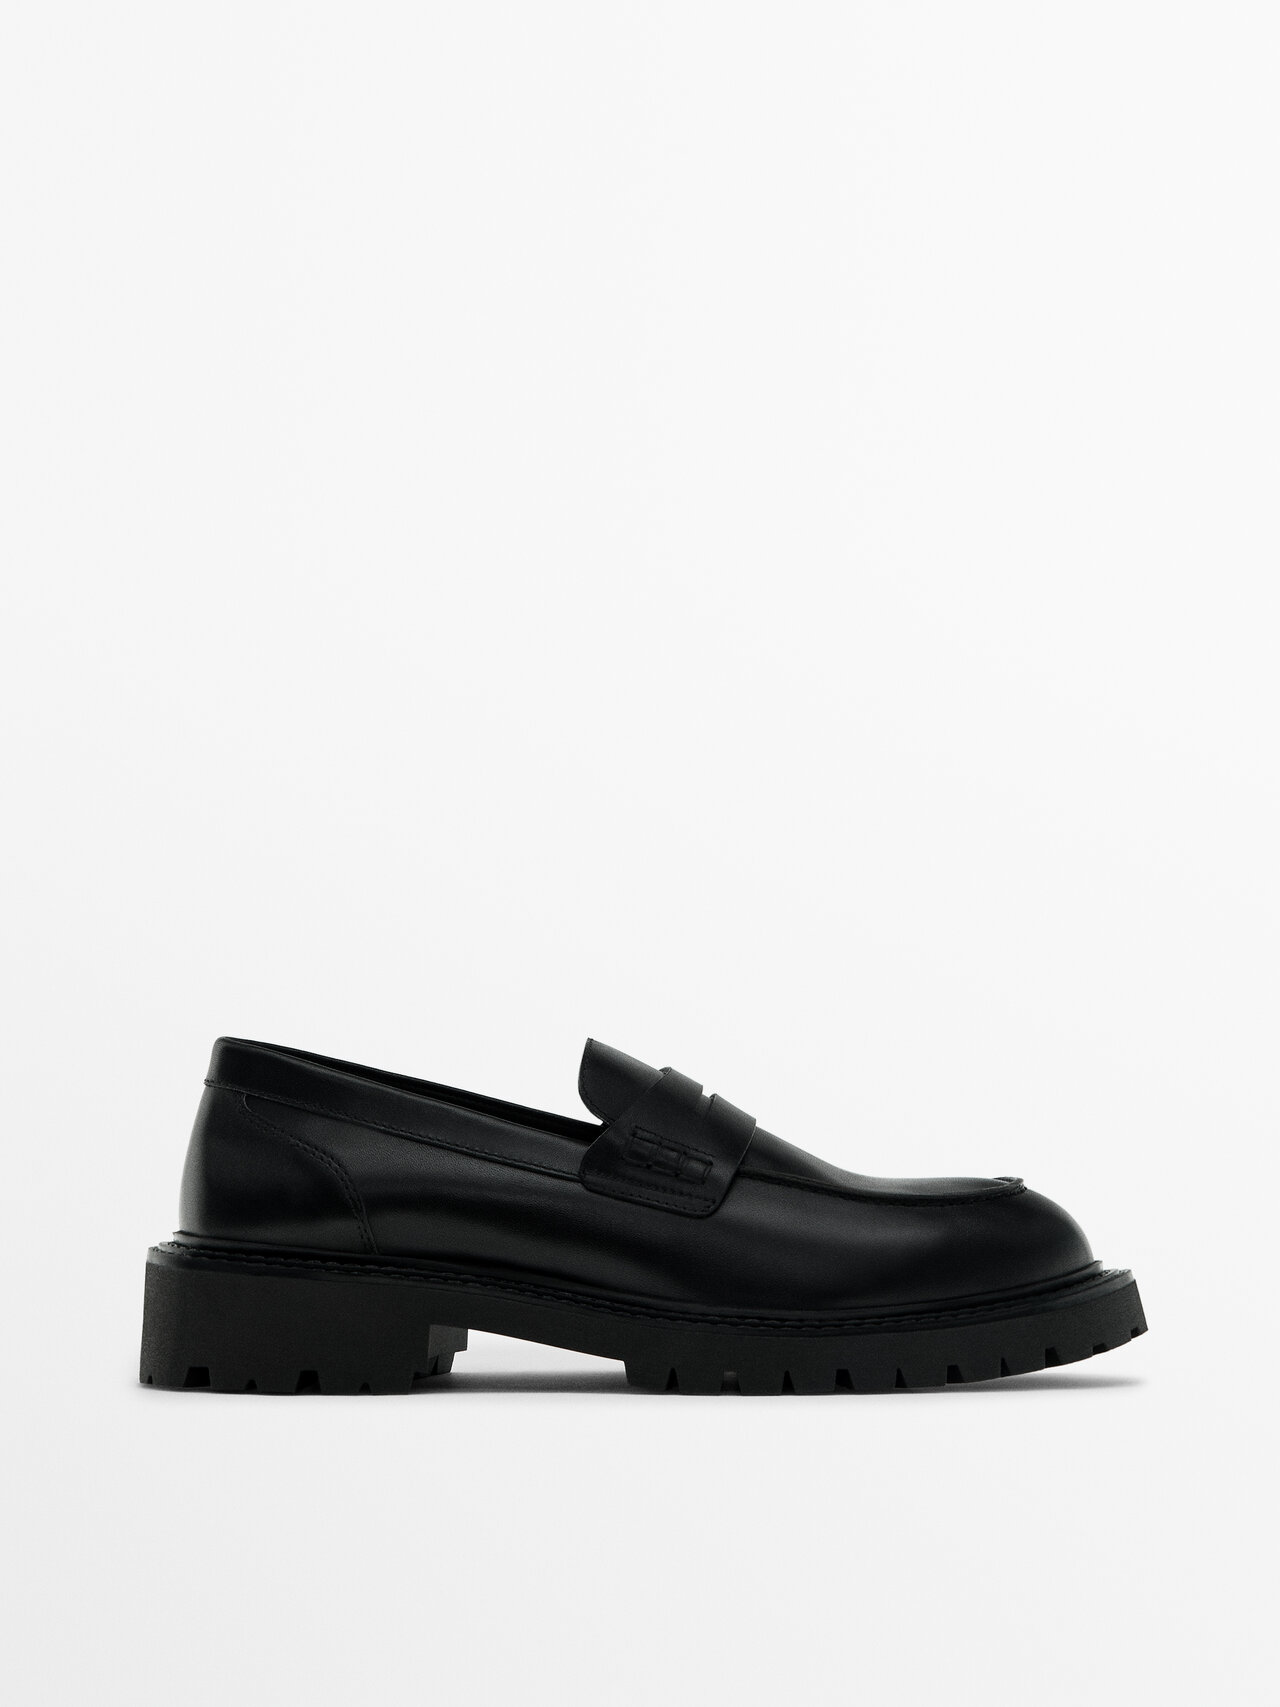 Massimo Dutti Black Leather Track Sole Loafers